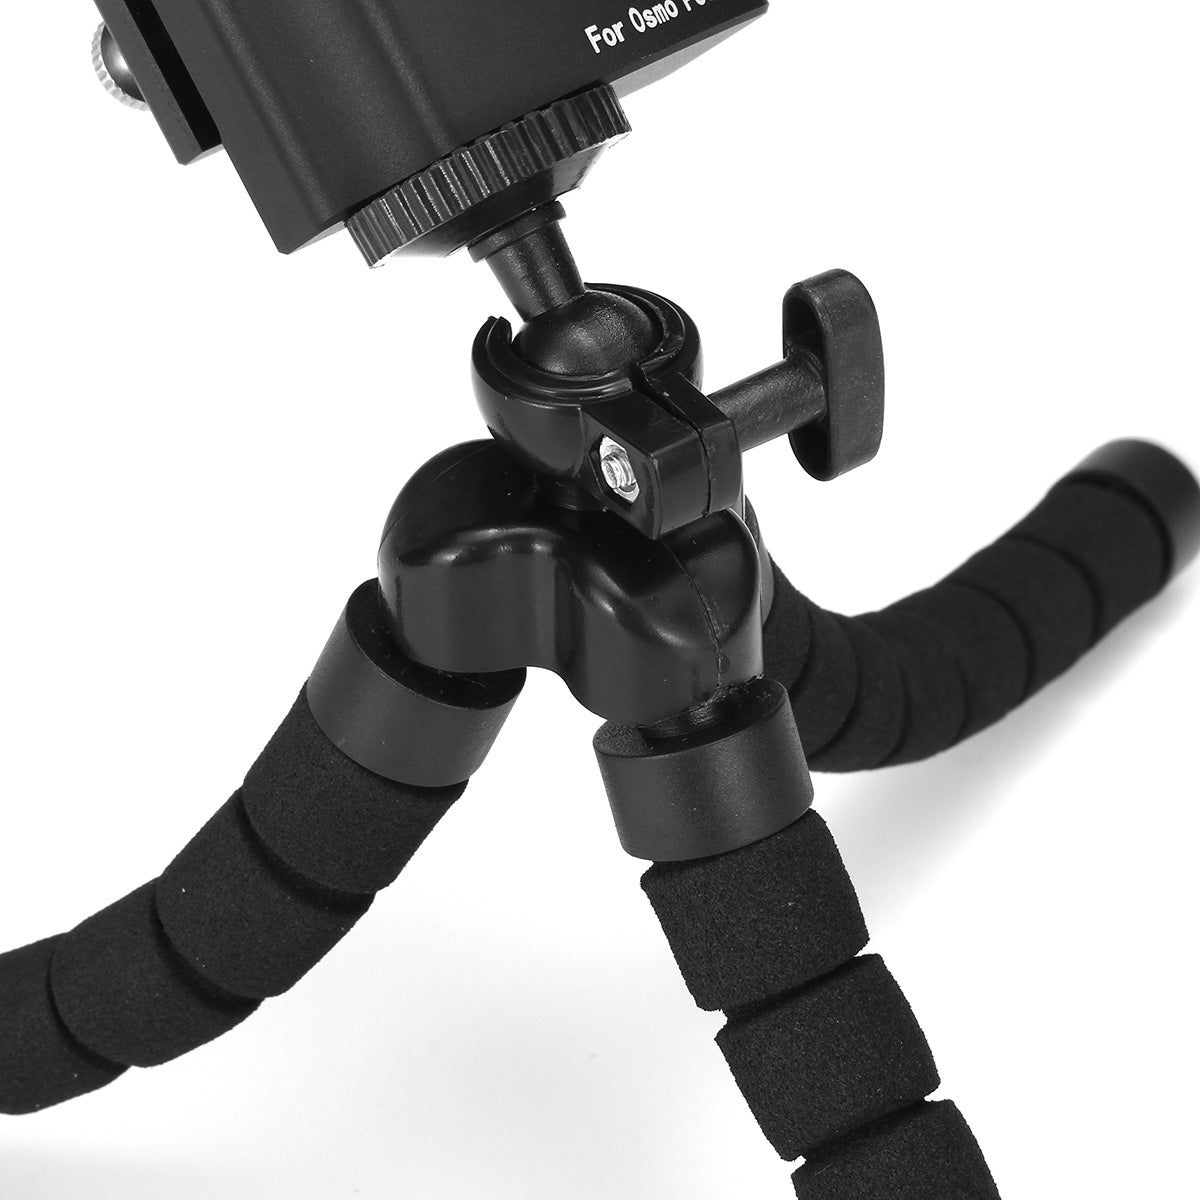 Kingwon LH-OP10 Holder Mount with Mini Desktop Flexible Octopus Tripod for DJI Osmo Pocket Gimbal Sports Camera